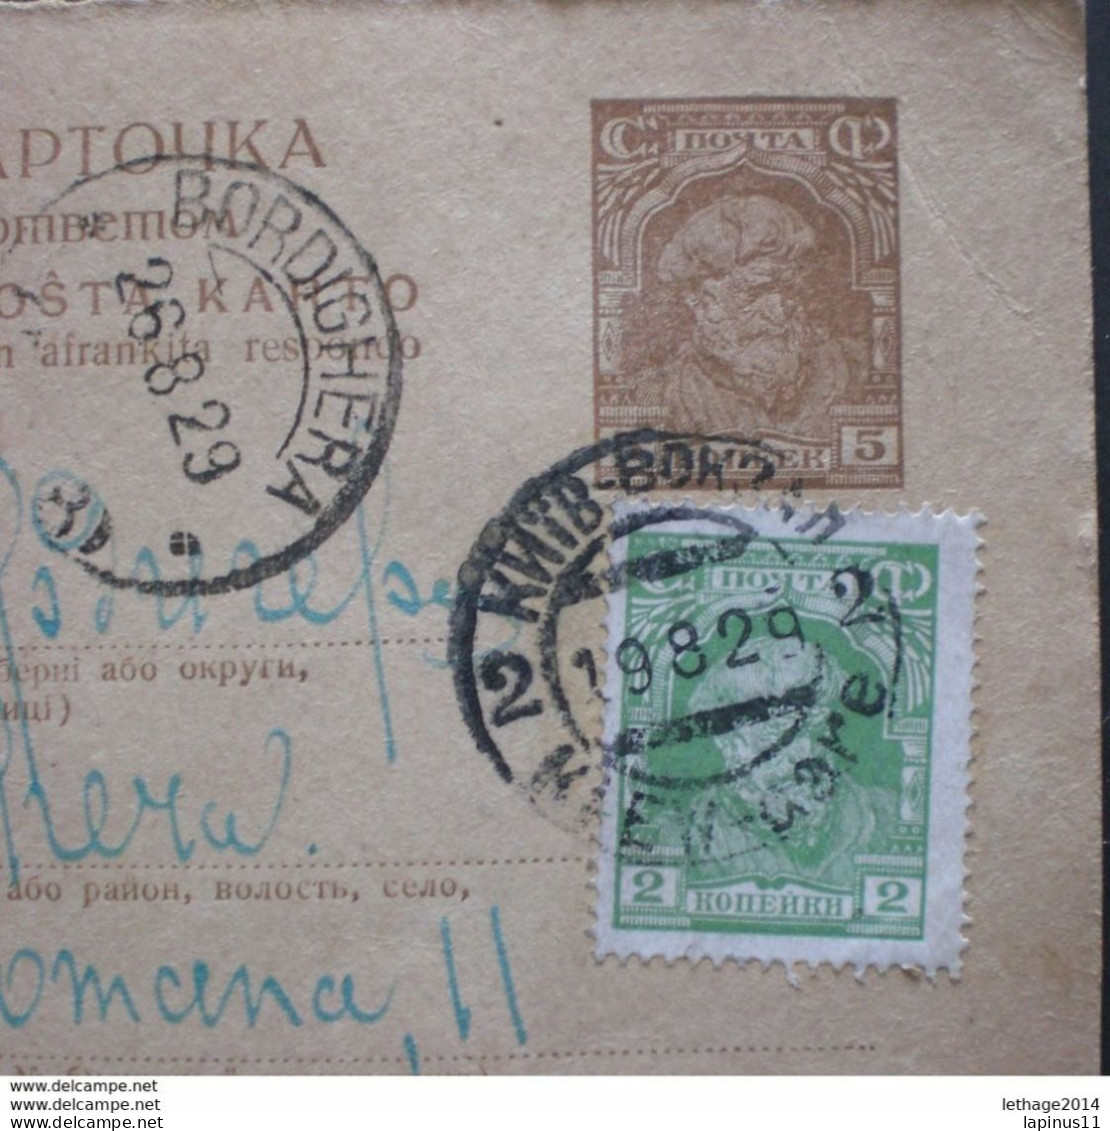 RUSSIA RUSSIE РОССИЯ STAMPS POST CARD 1929 TRICENTENAIRE DE L AVENEMENT DE ROMANOW RUSSLAND TO ITALY RRR RIF. TAGG (161) - Lettres & Documents